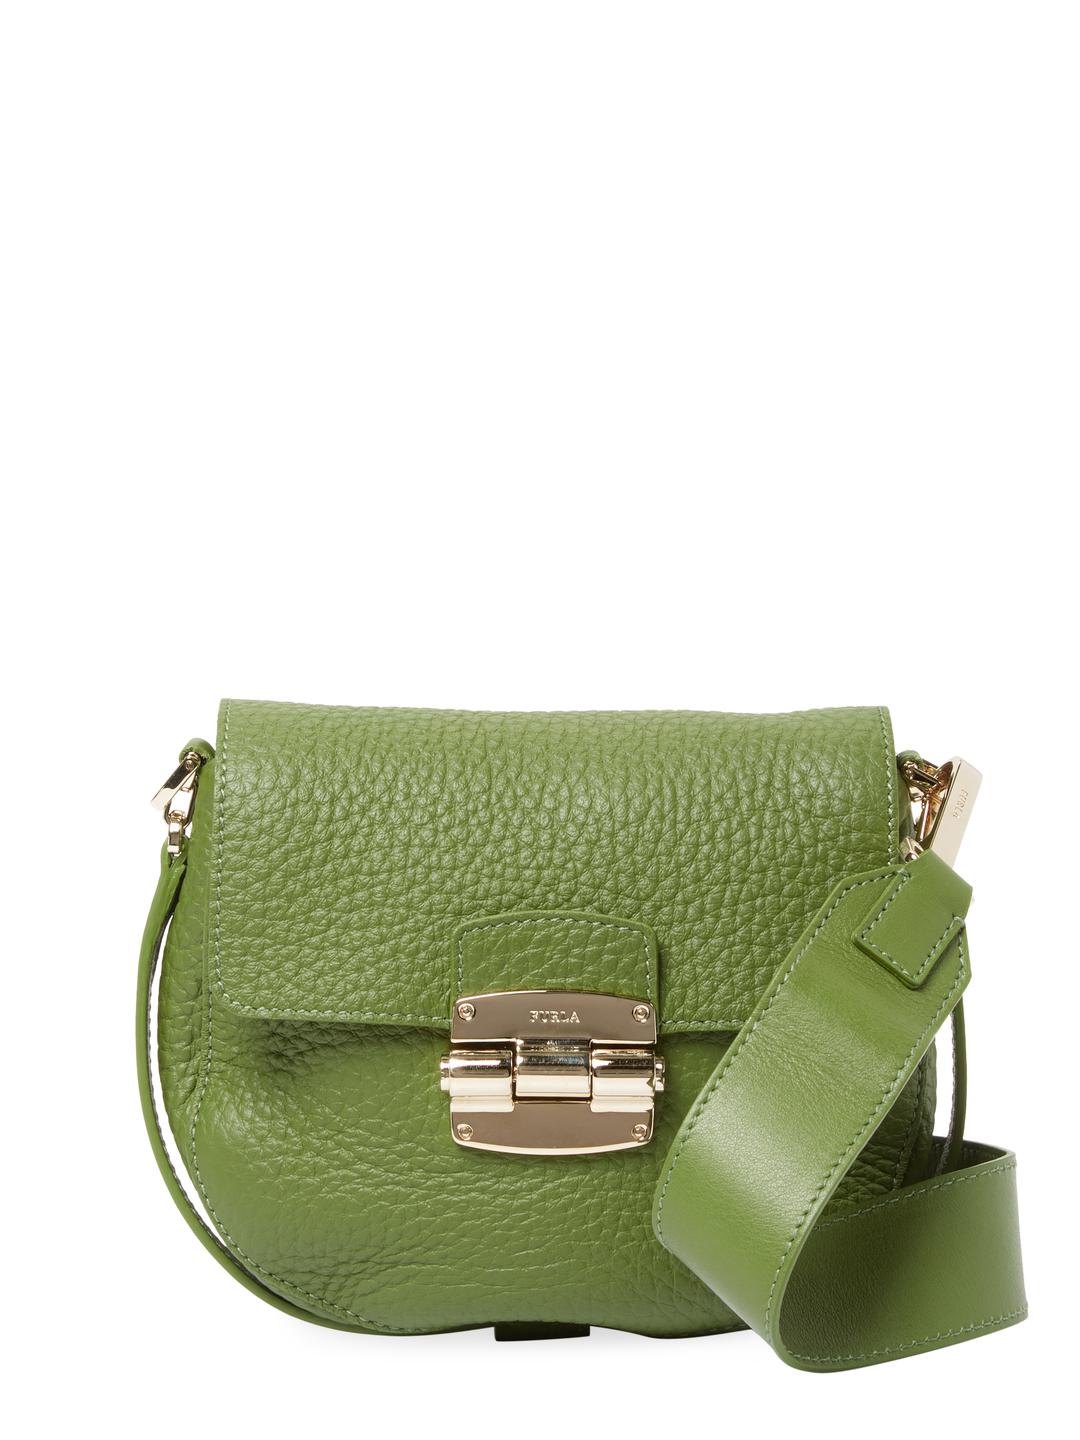 Furla Leather Club Mini Crossbody Bag in Green | Lyst UK